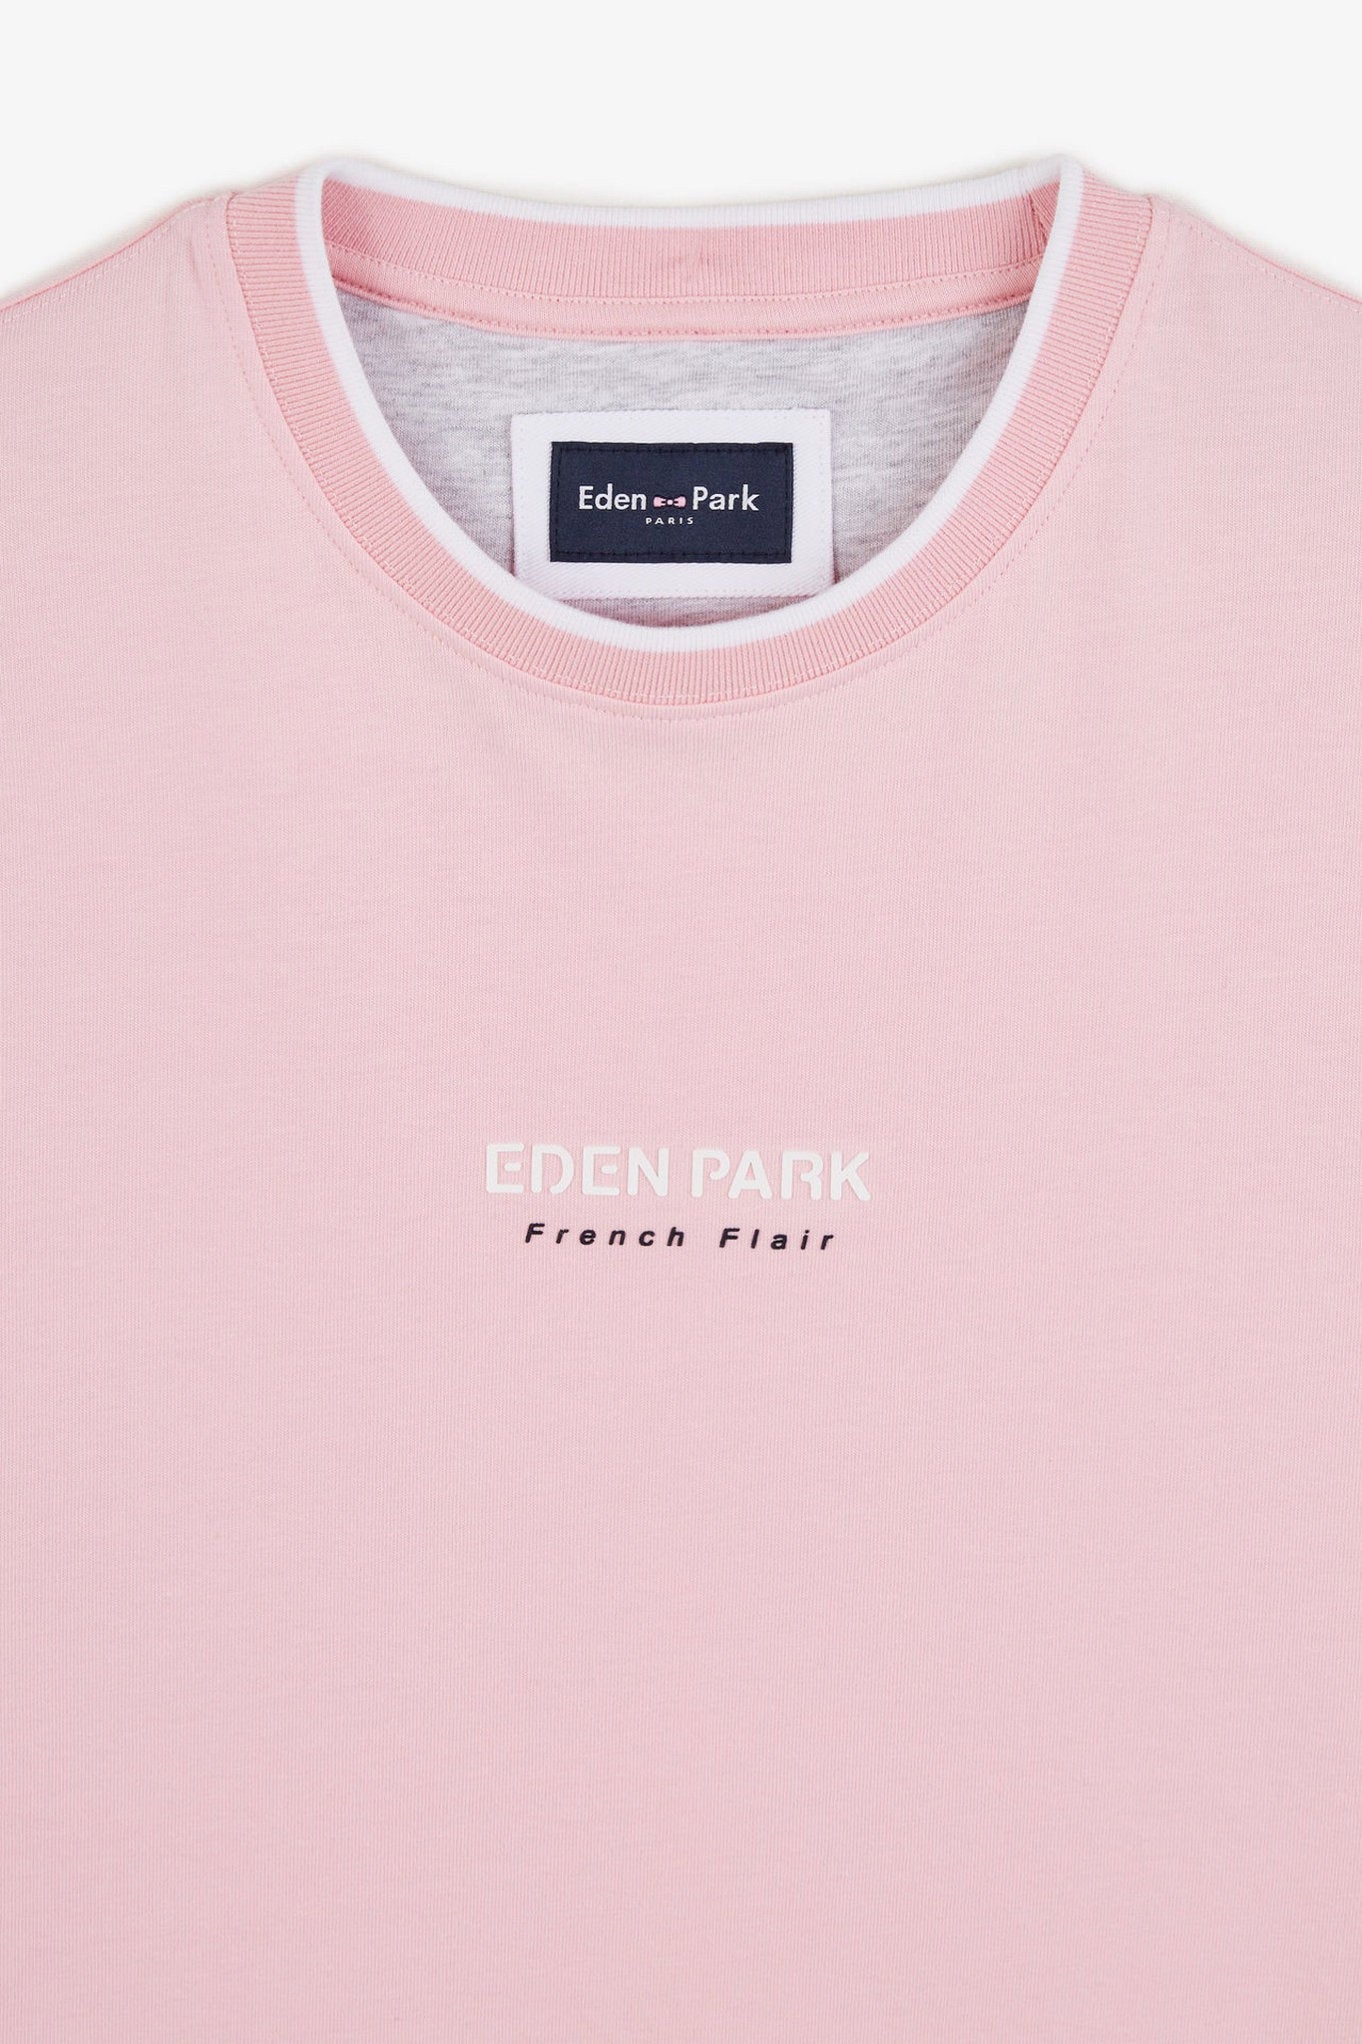 Plain Pink Short-Sleeved T-Shirt_E24MAITC0018_ROC16_06